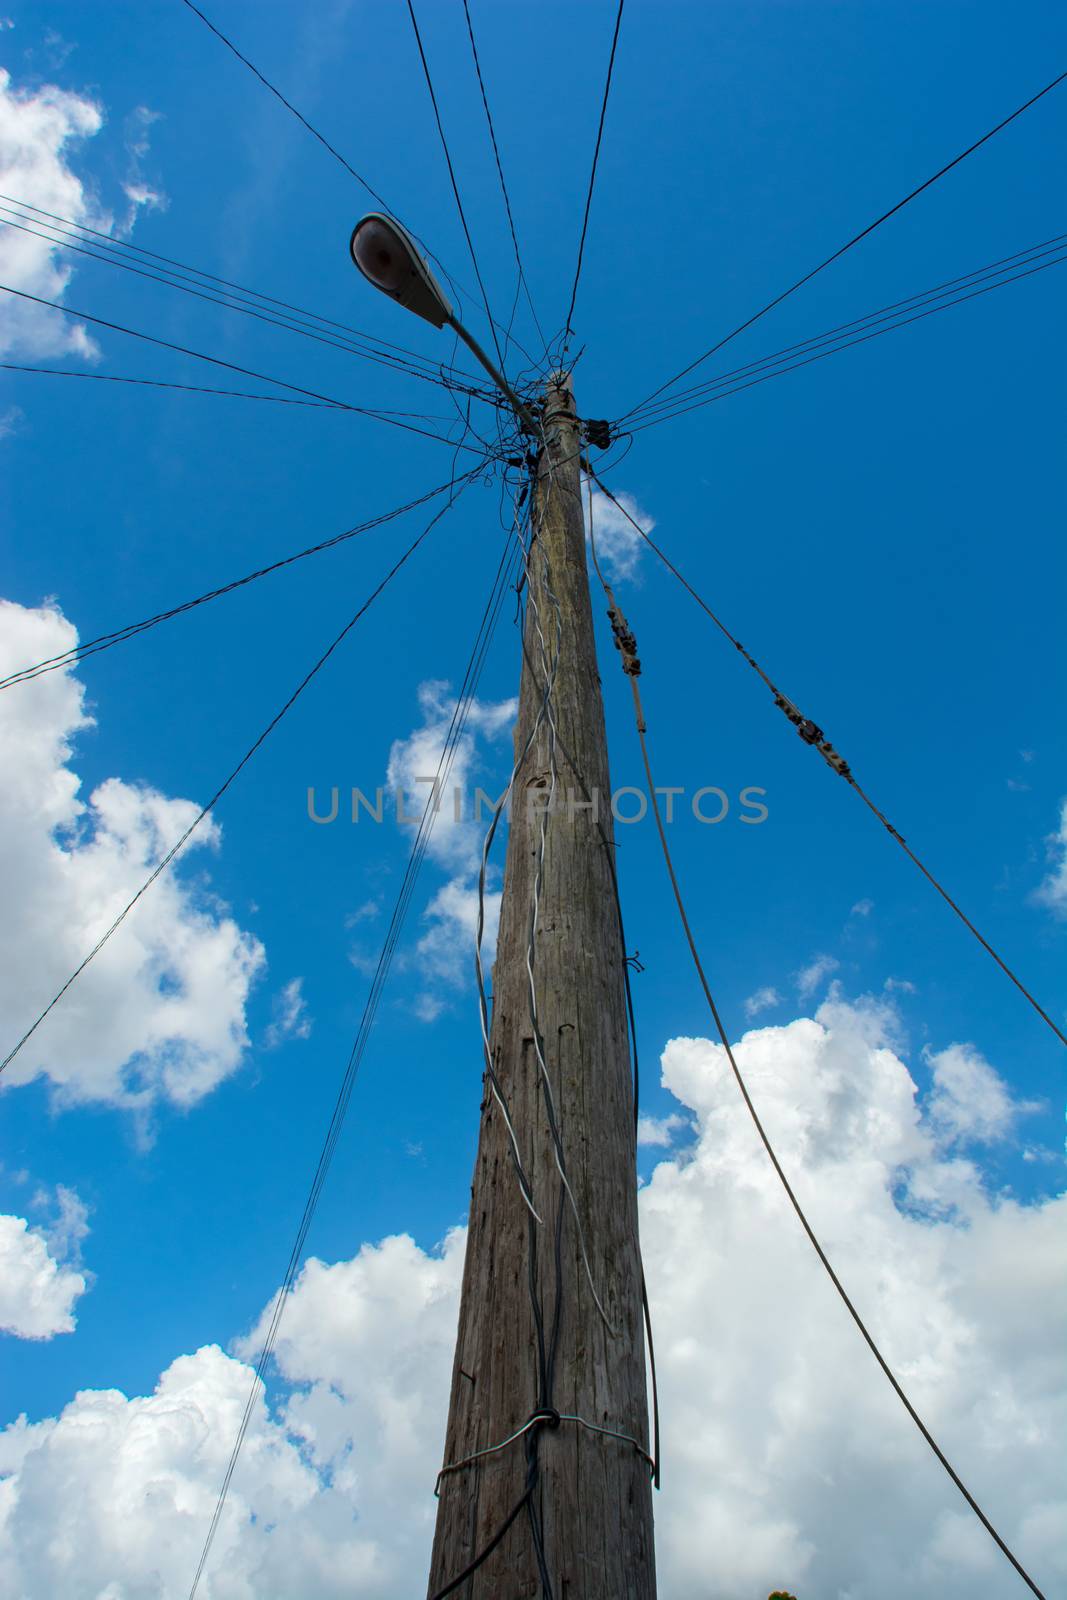 old electric pole in Havana Cuba